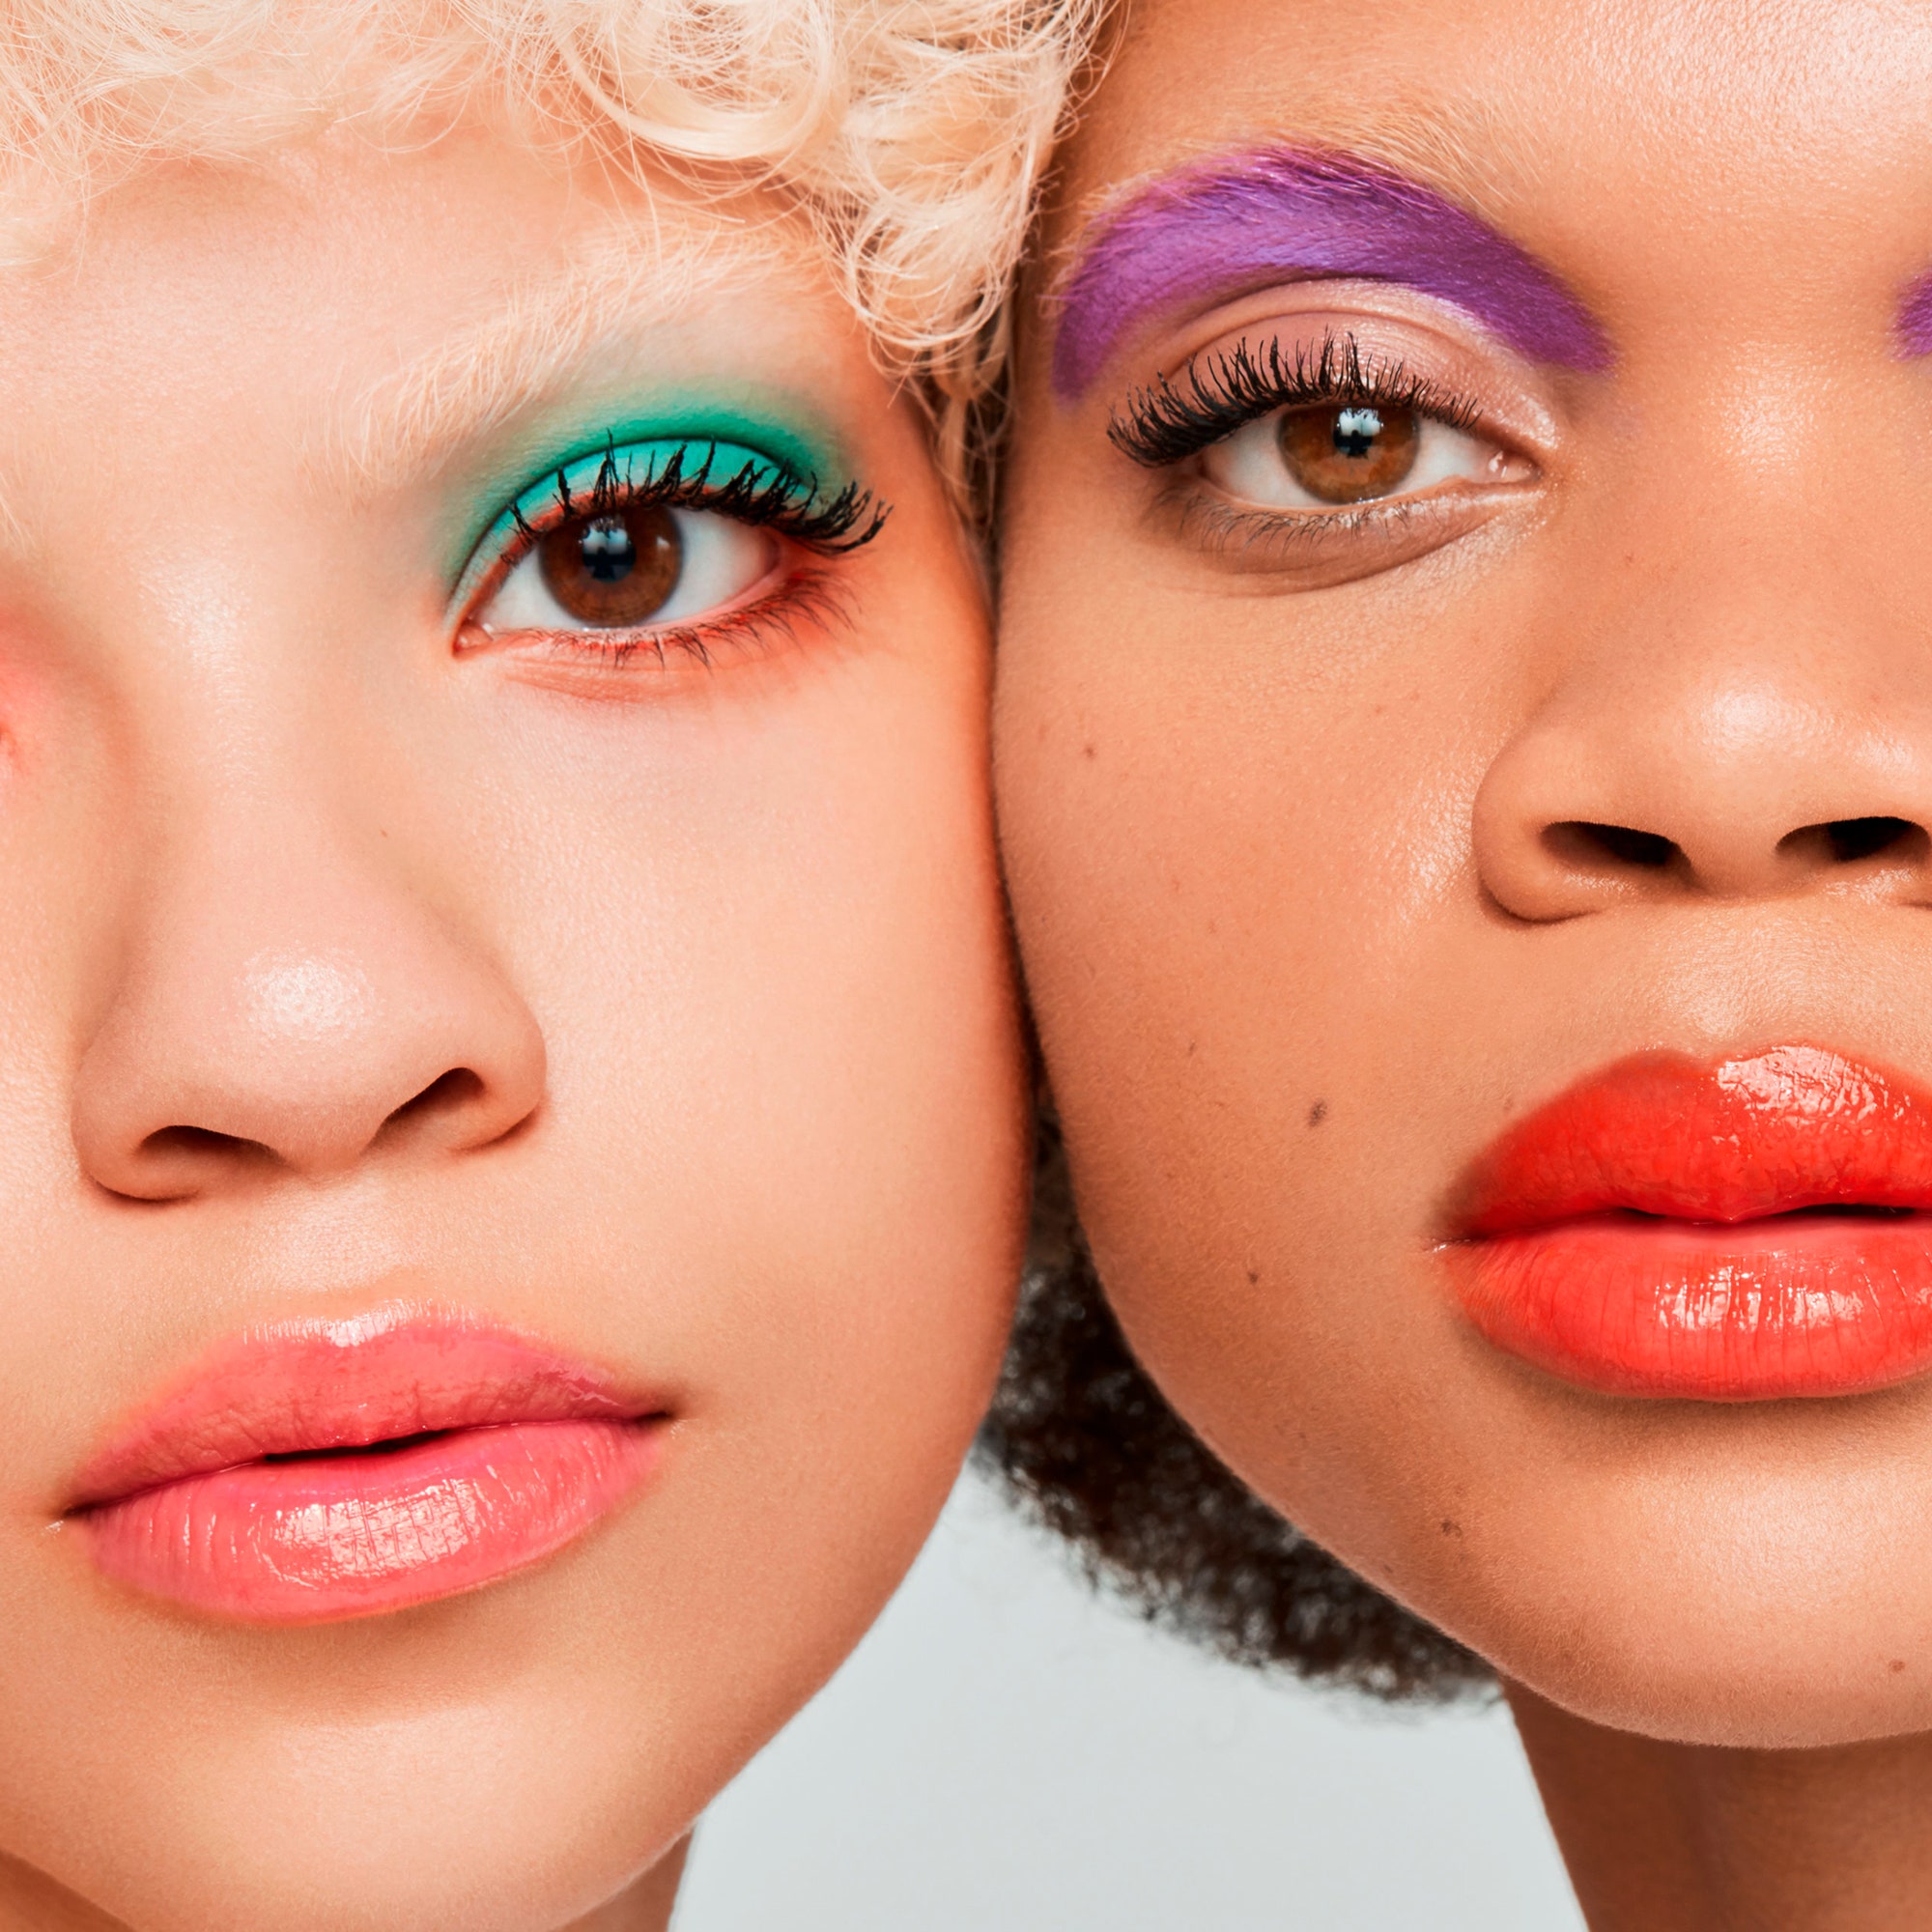 Best Eye Makeup 2020: Eyeliner, Mascara, and Brows